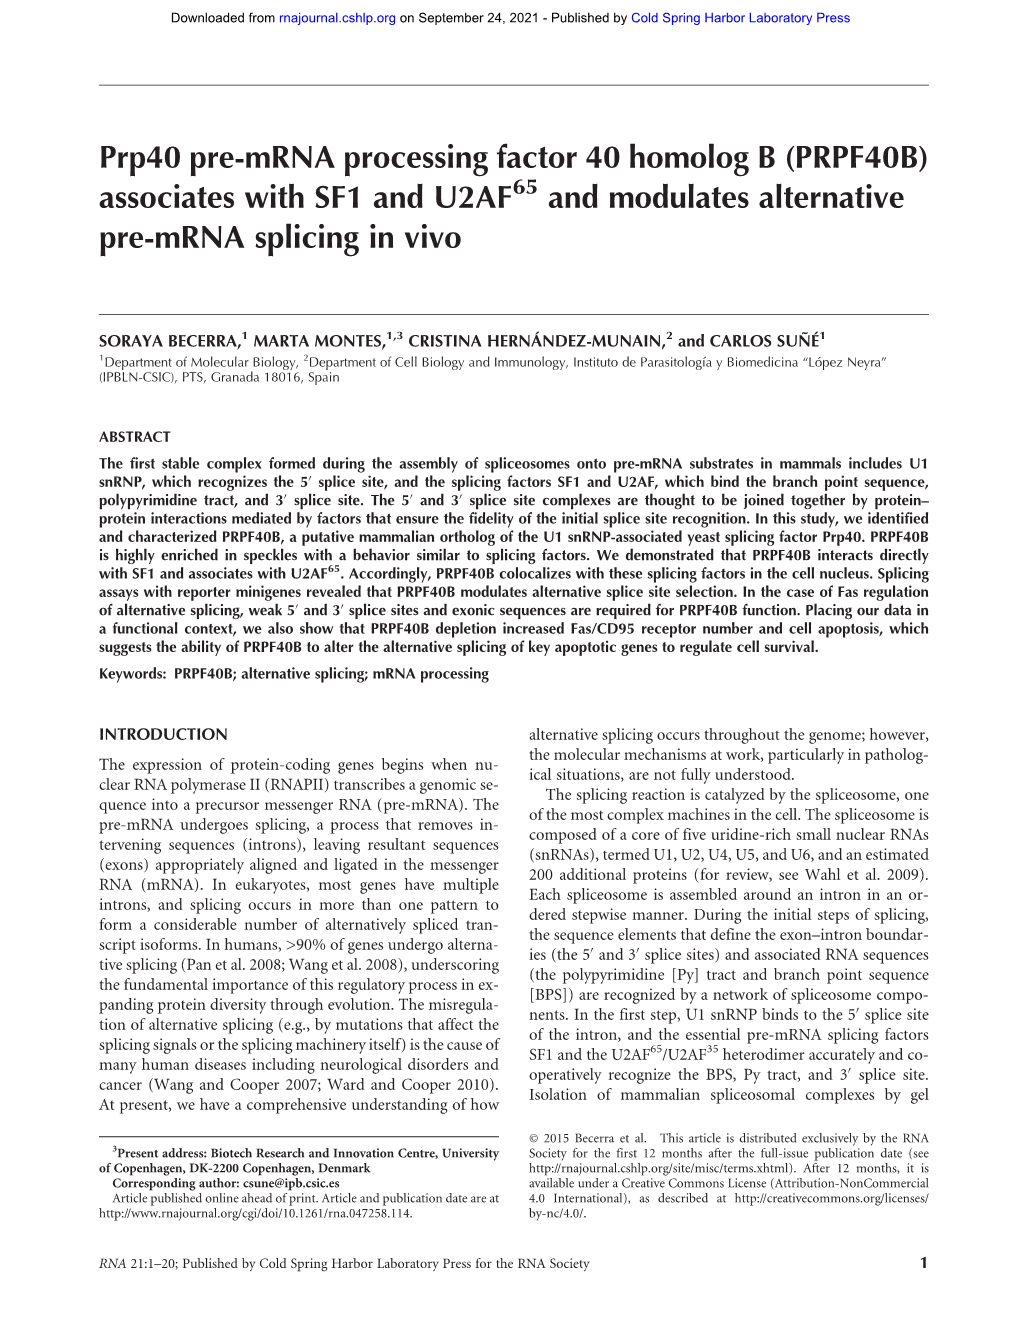 Prp40 Pre-Mrna Processing Factor 40 Homolog B (PRPF40B) Associates with SF1 and U2AF65 and Modulates Alternative Pre-Mrna Splicing in Vivo